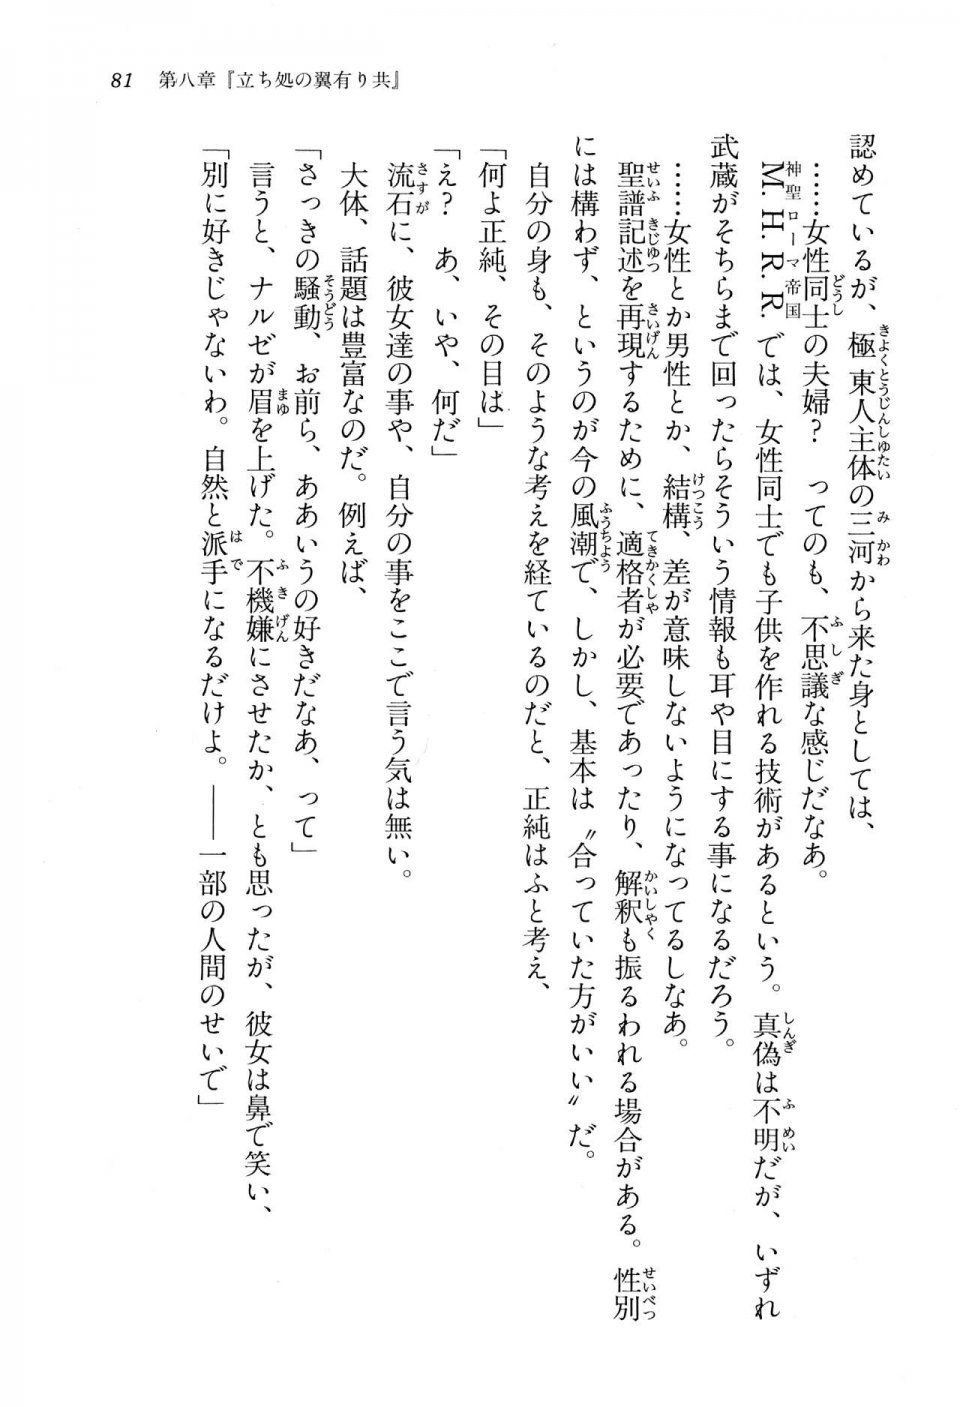 Kyoukai Senjou no Horizon BD Special Mininovel Vol 6(3B) - Photo #85